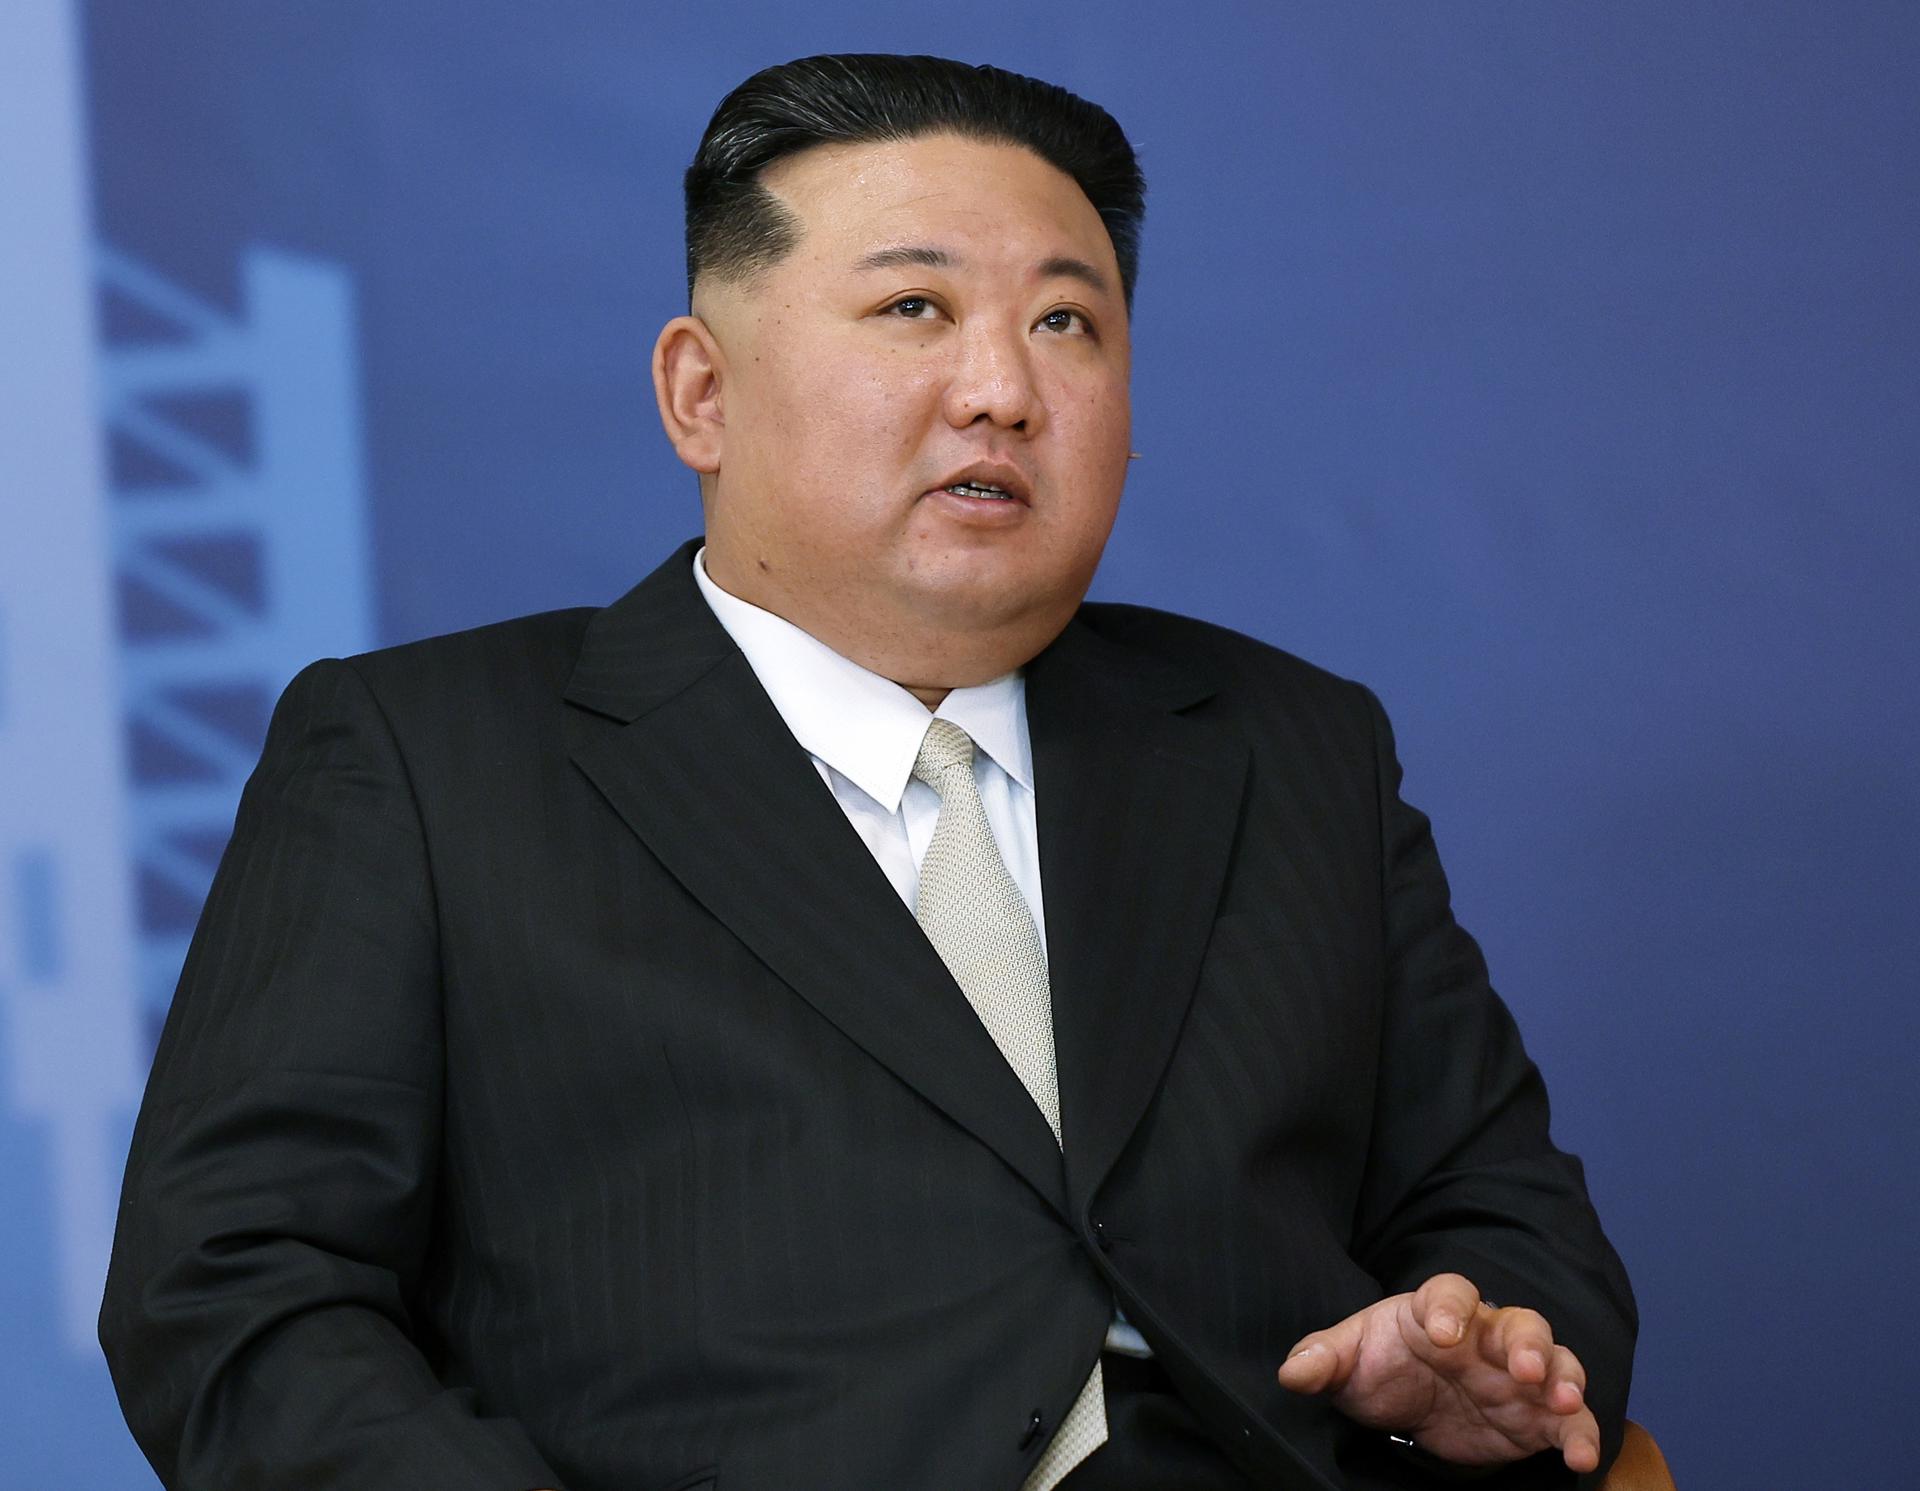 Fotografía de archivo en la que se observa al líder norcoreano Kim Jong-un. EFE/EPA/VLADIMIR SMIRNOV / SPUTNIK / KREMLIN POOL